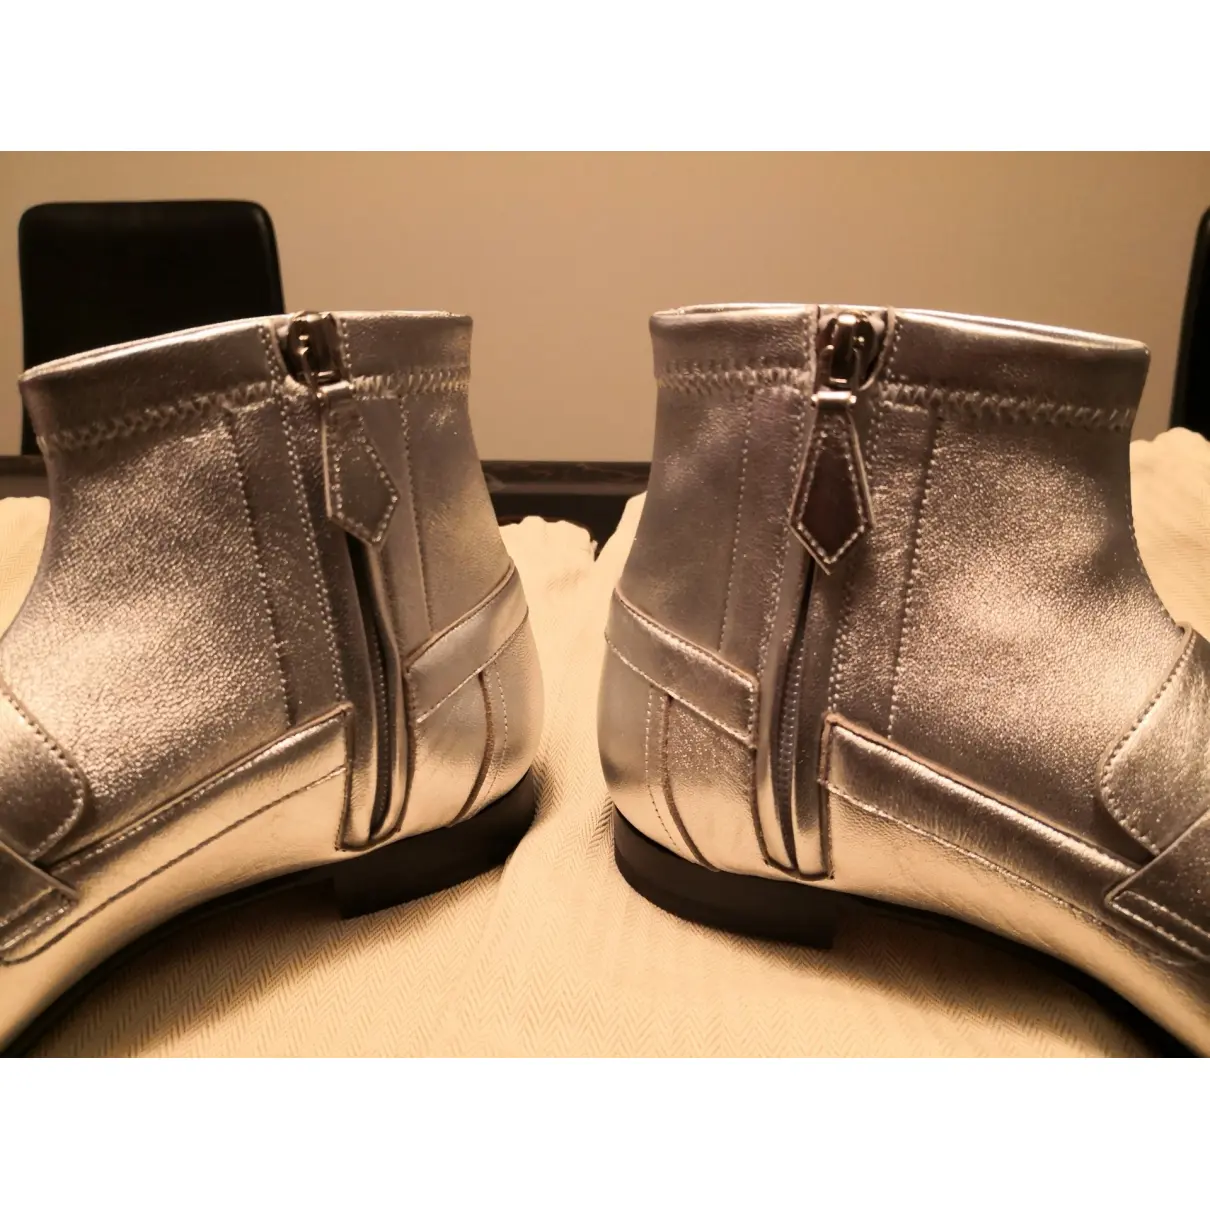 Leather boots Hermès